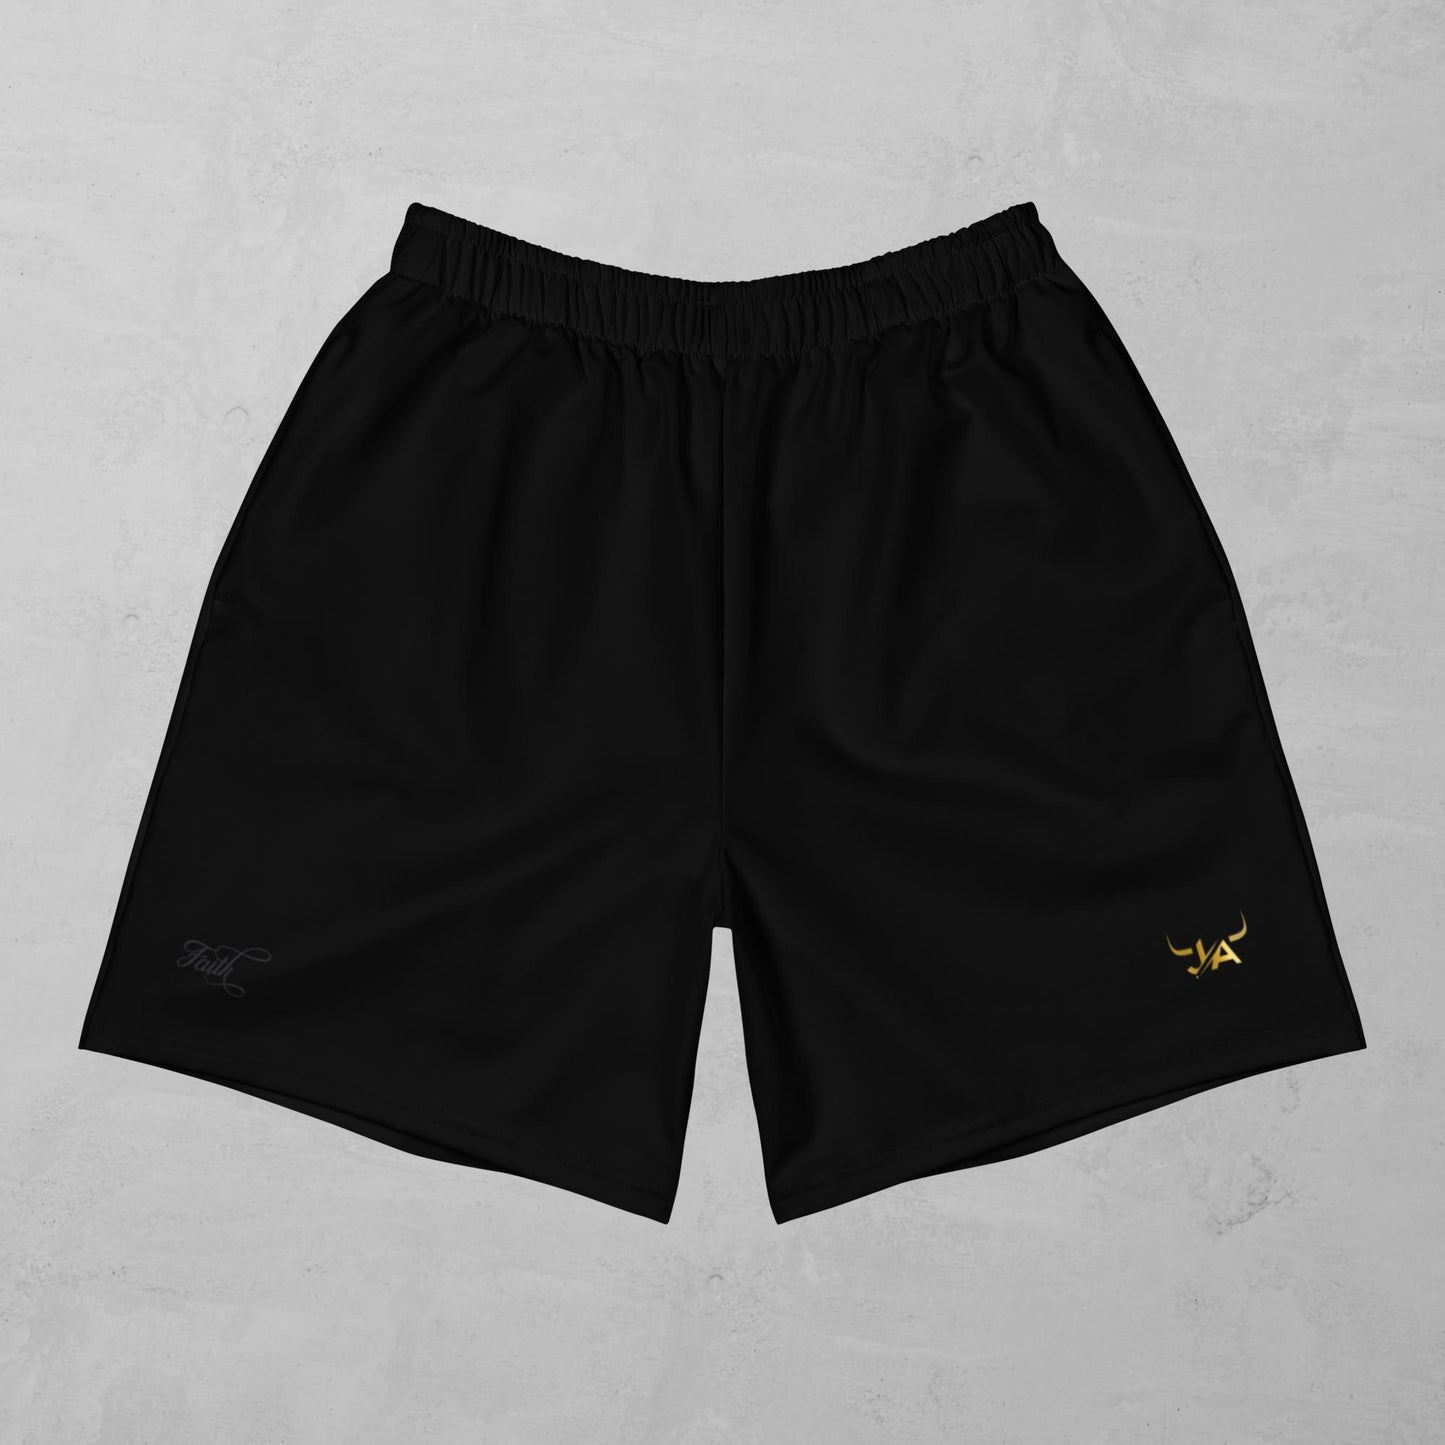 J.A Men's Athletic Shorts